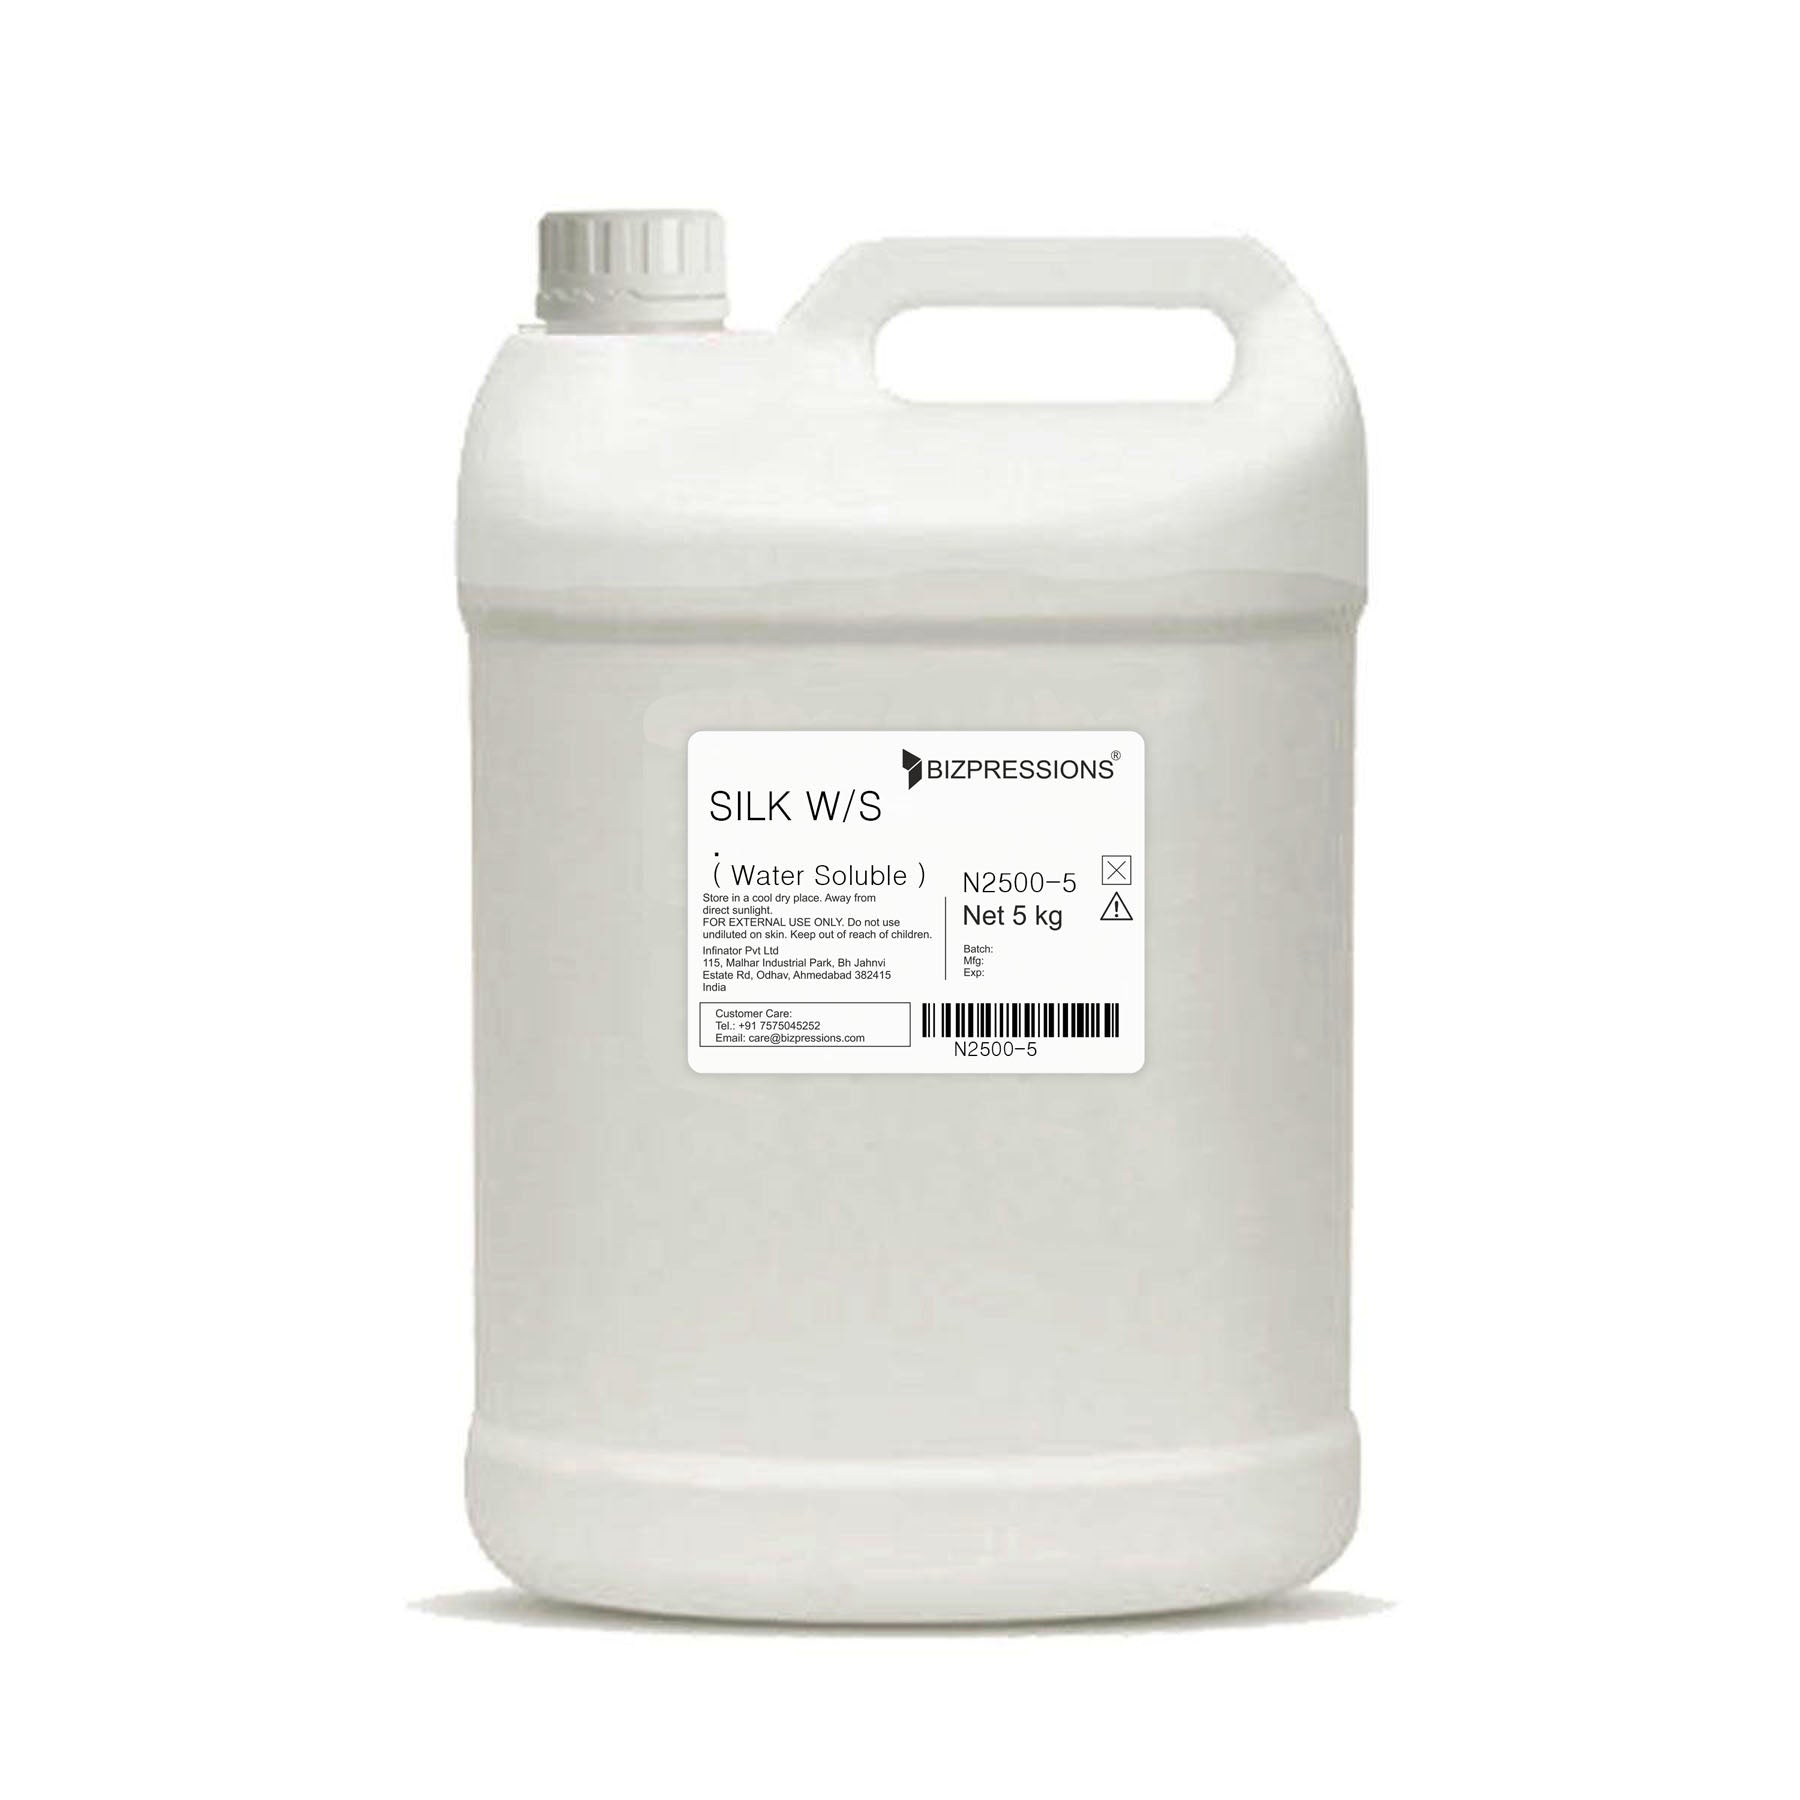 SILK W/S - Fragrance ( Water Soluble ) - 5 kg